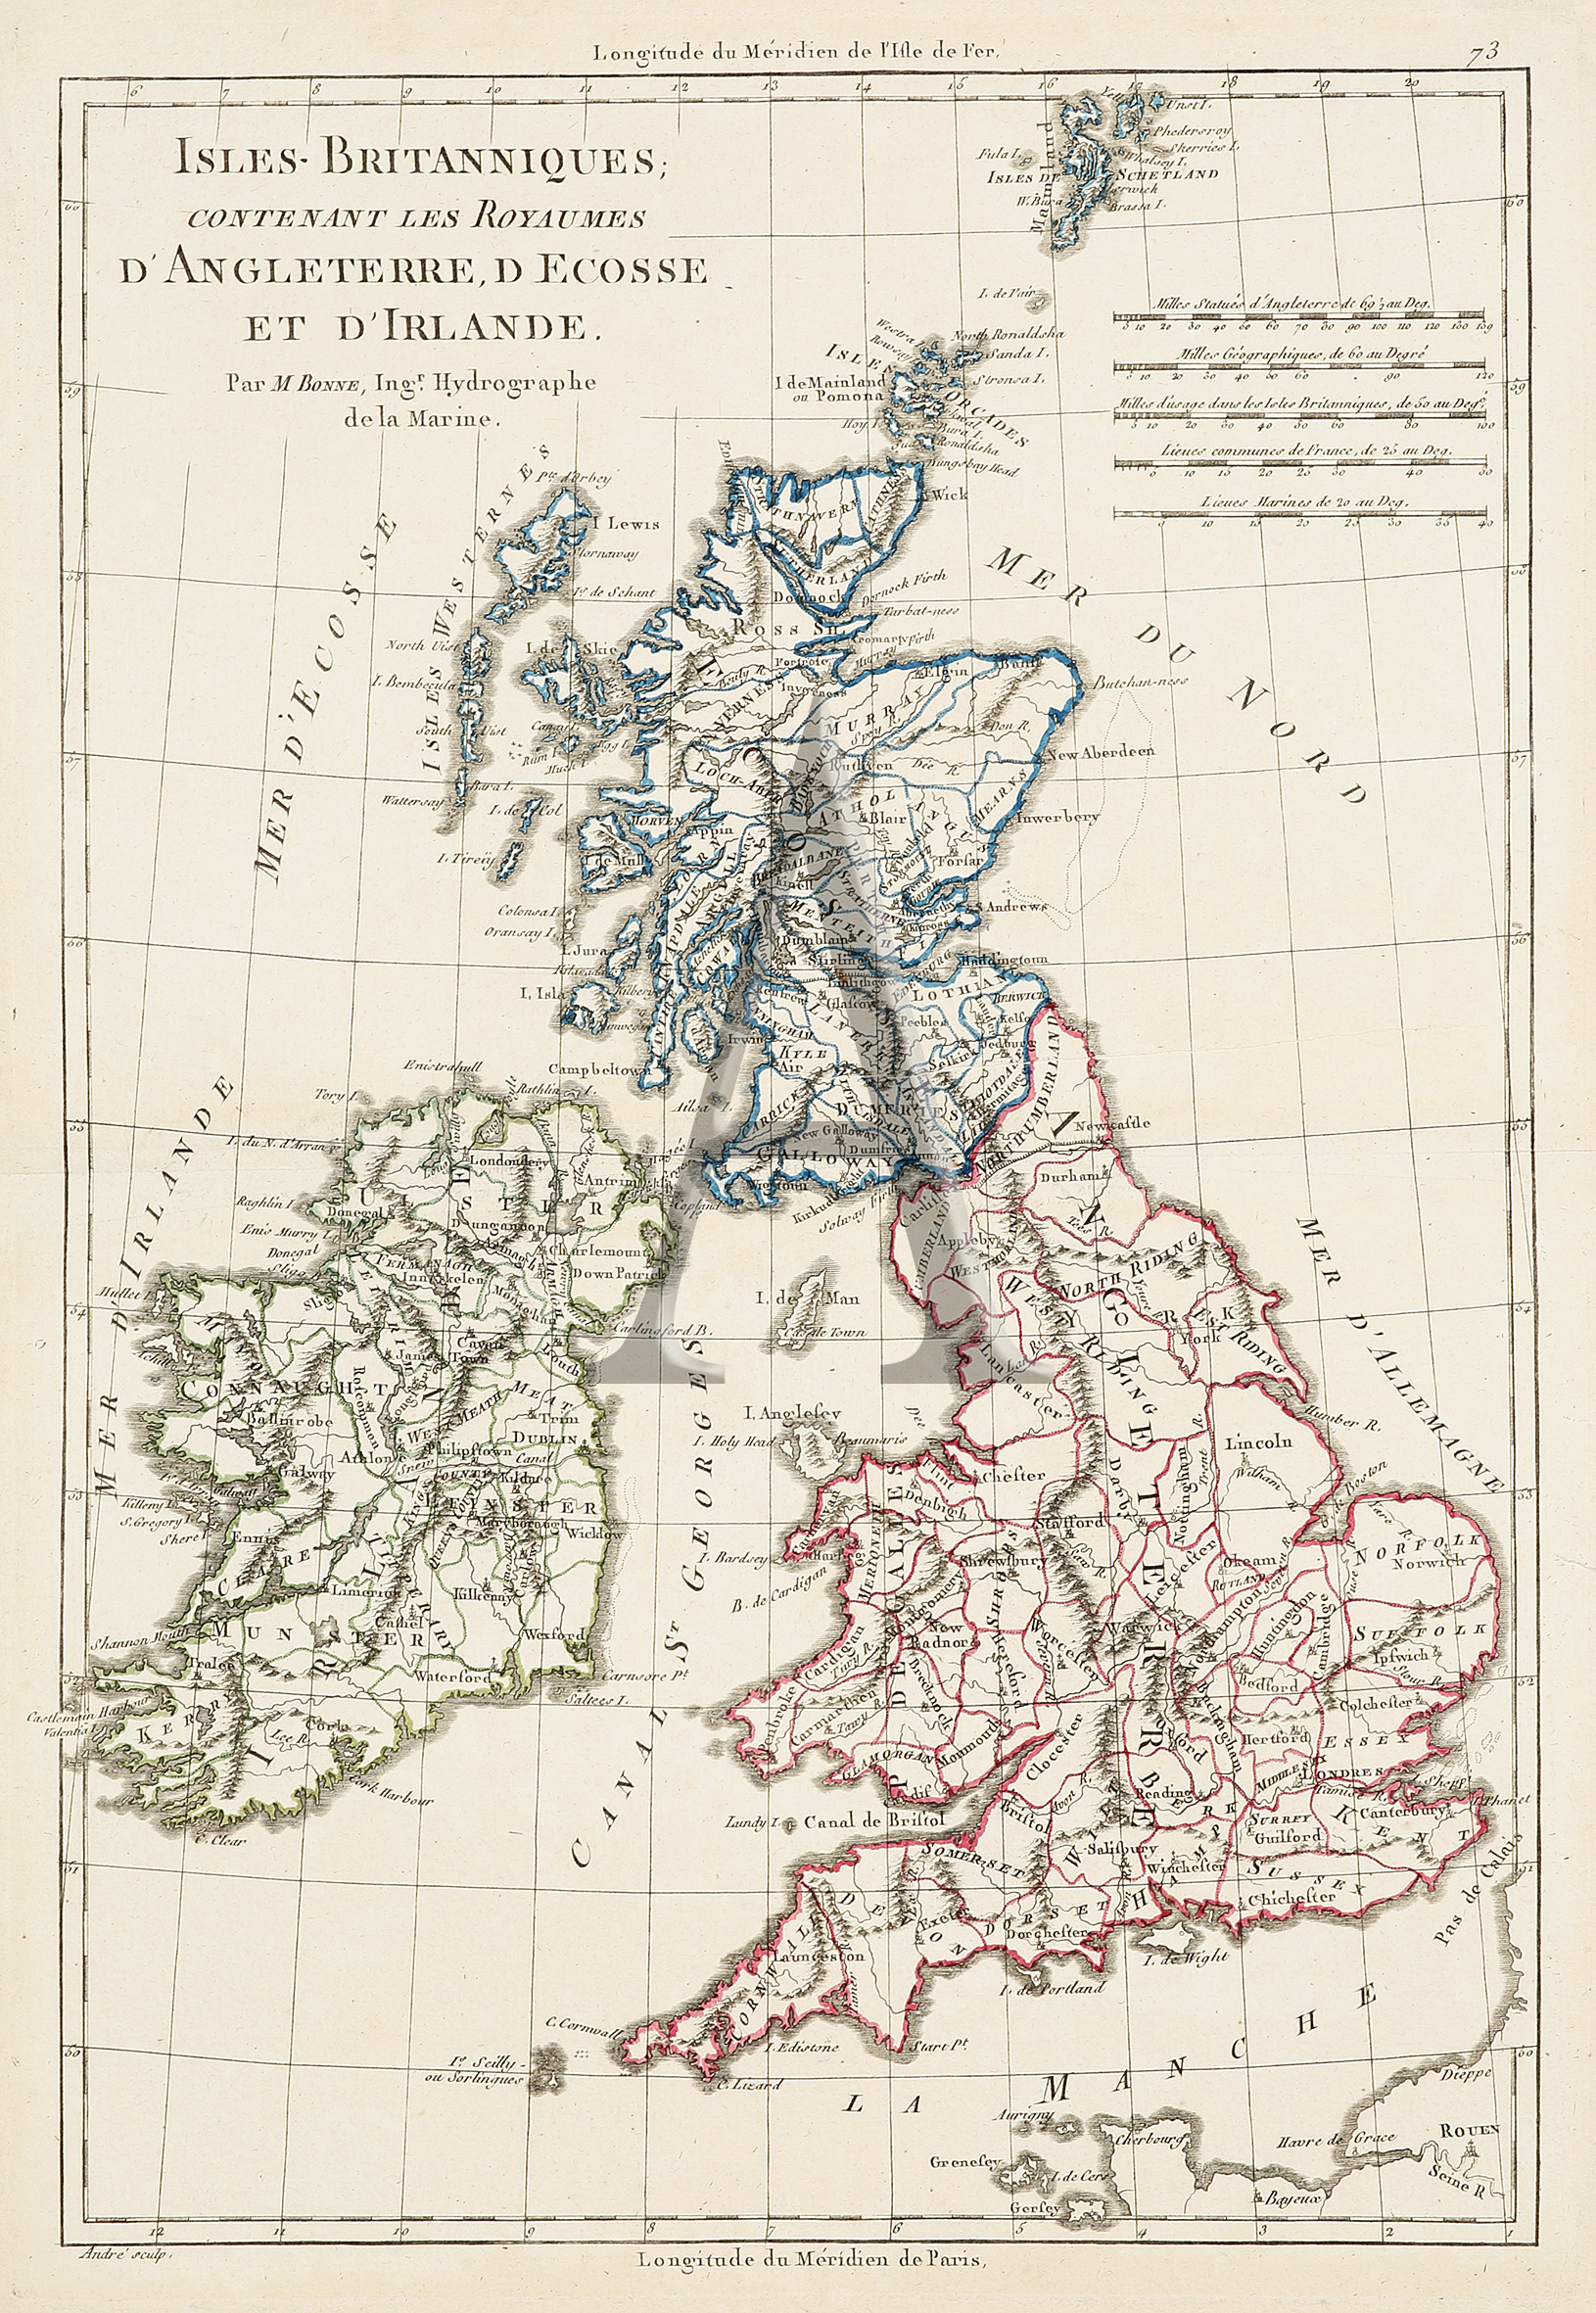 Isles Britanniques Contenant les Royaumes D'Angleterre, D Ecosse et D'Irlande - Antique Print from 1788